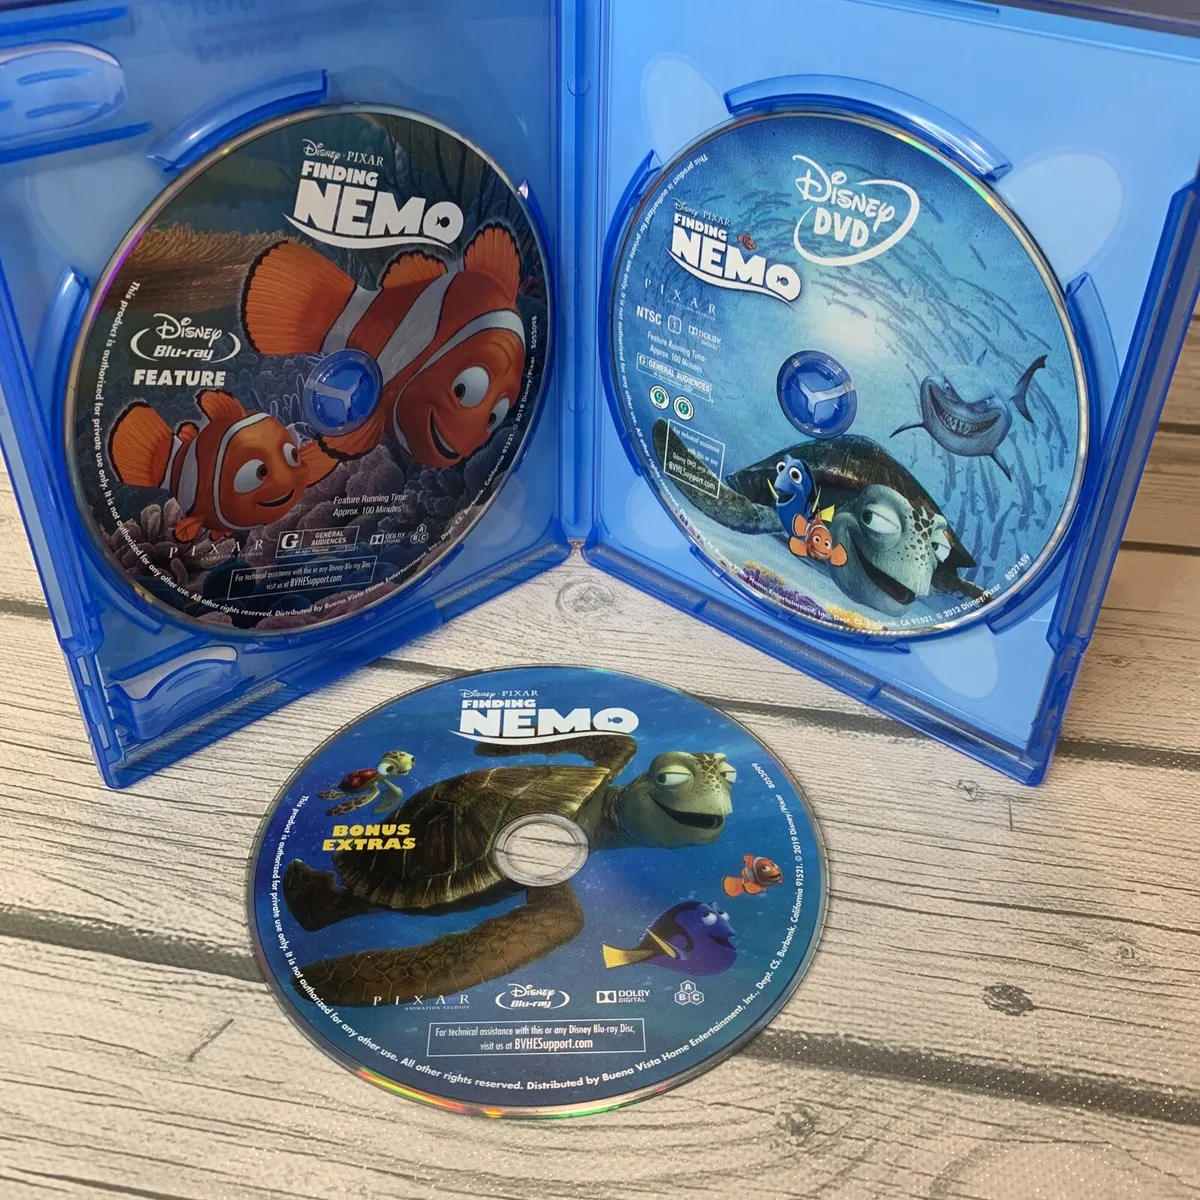 Residuos Norma bandeja Finding Nemo Blu-Ray &amp; DVD &amp; Bonus Disc Disney Pixar 3-Disc Set  786936865288 | eBay